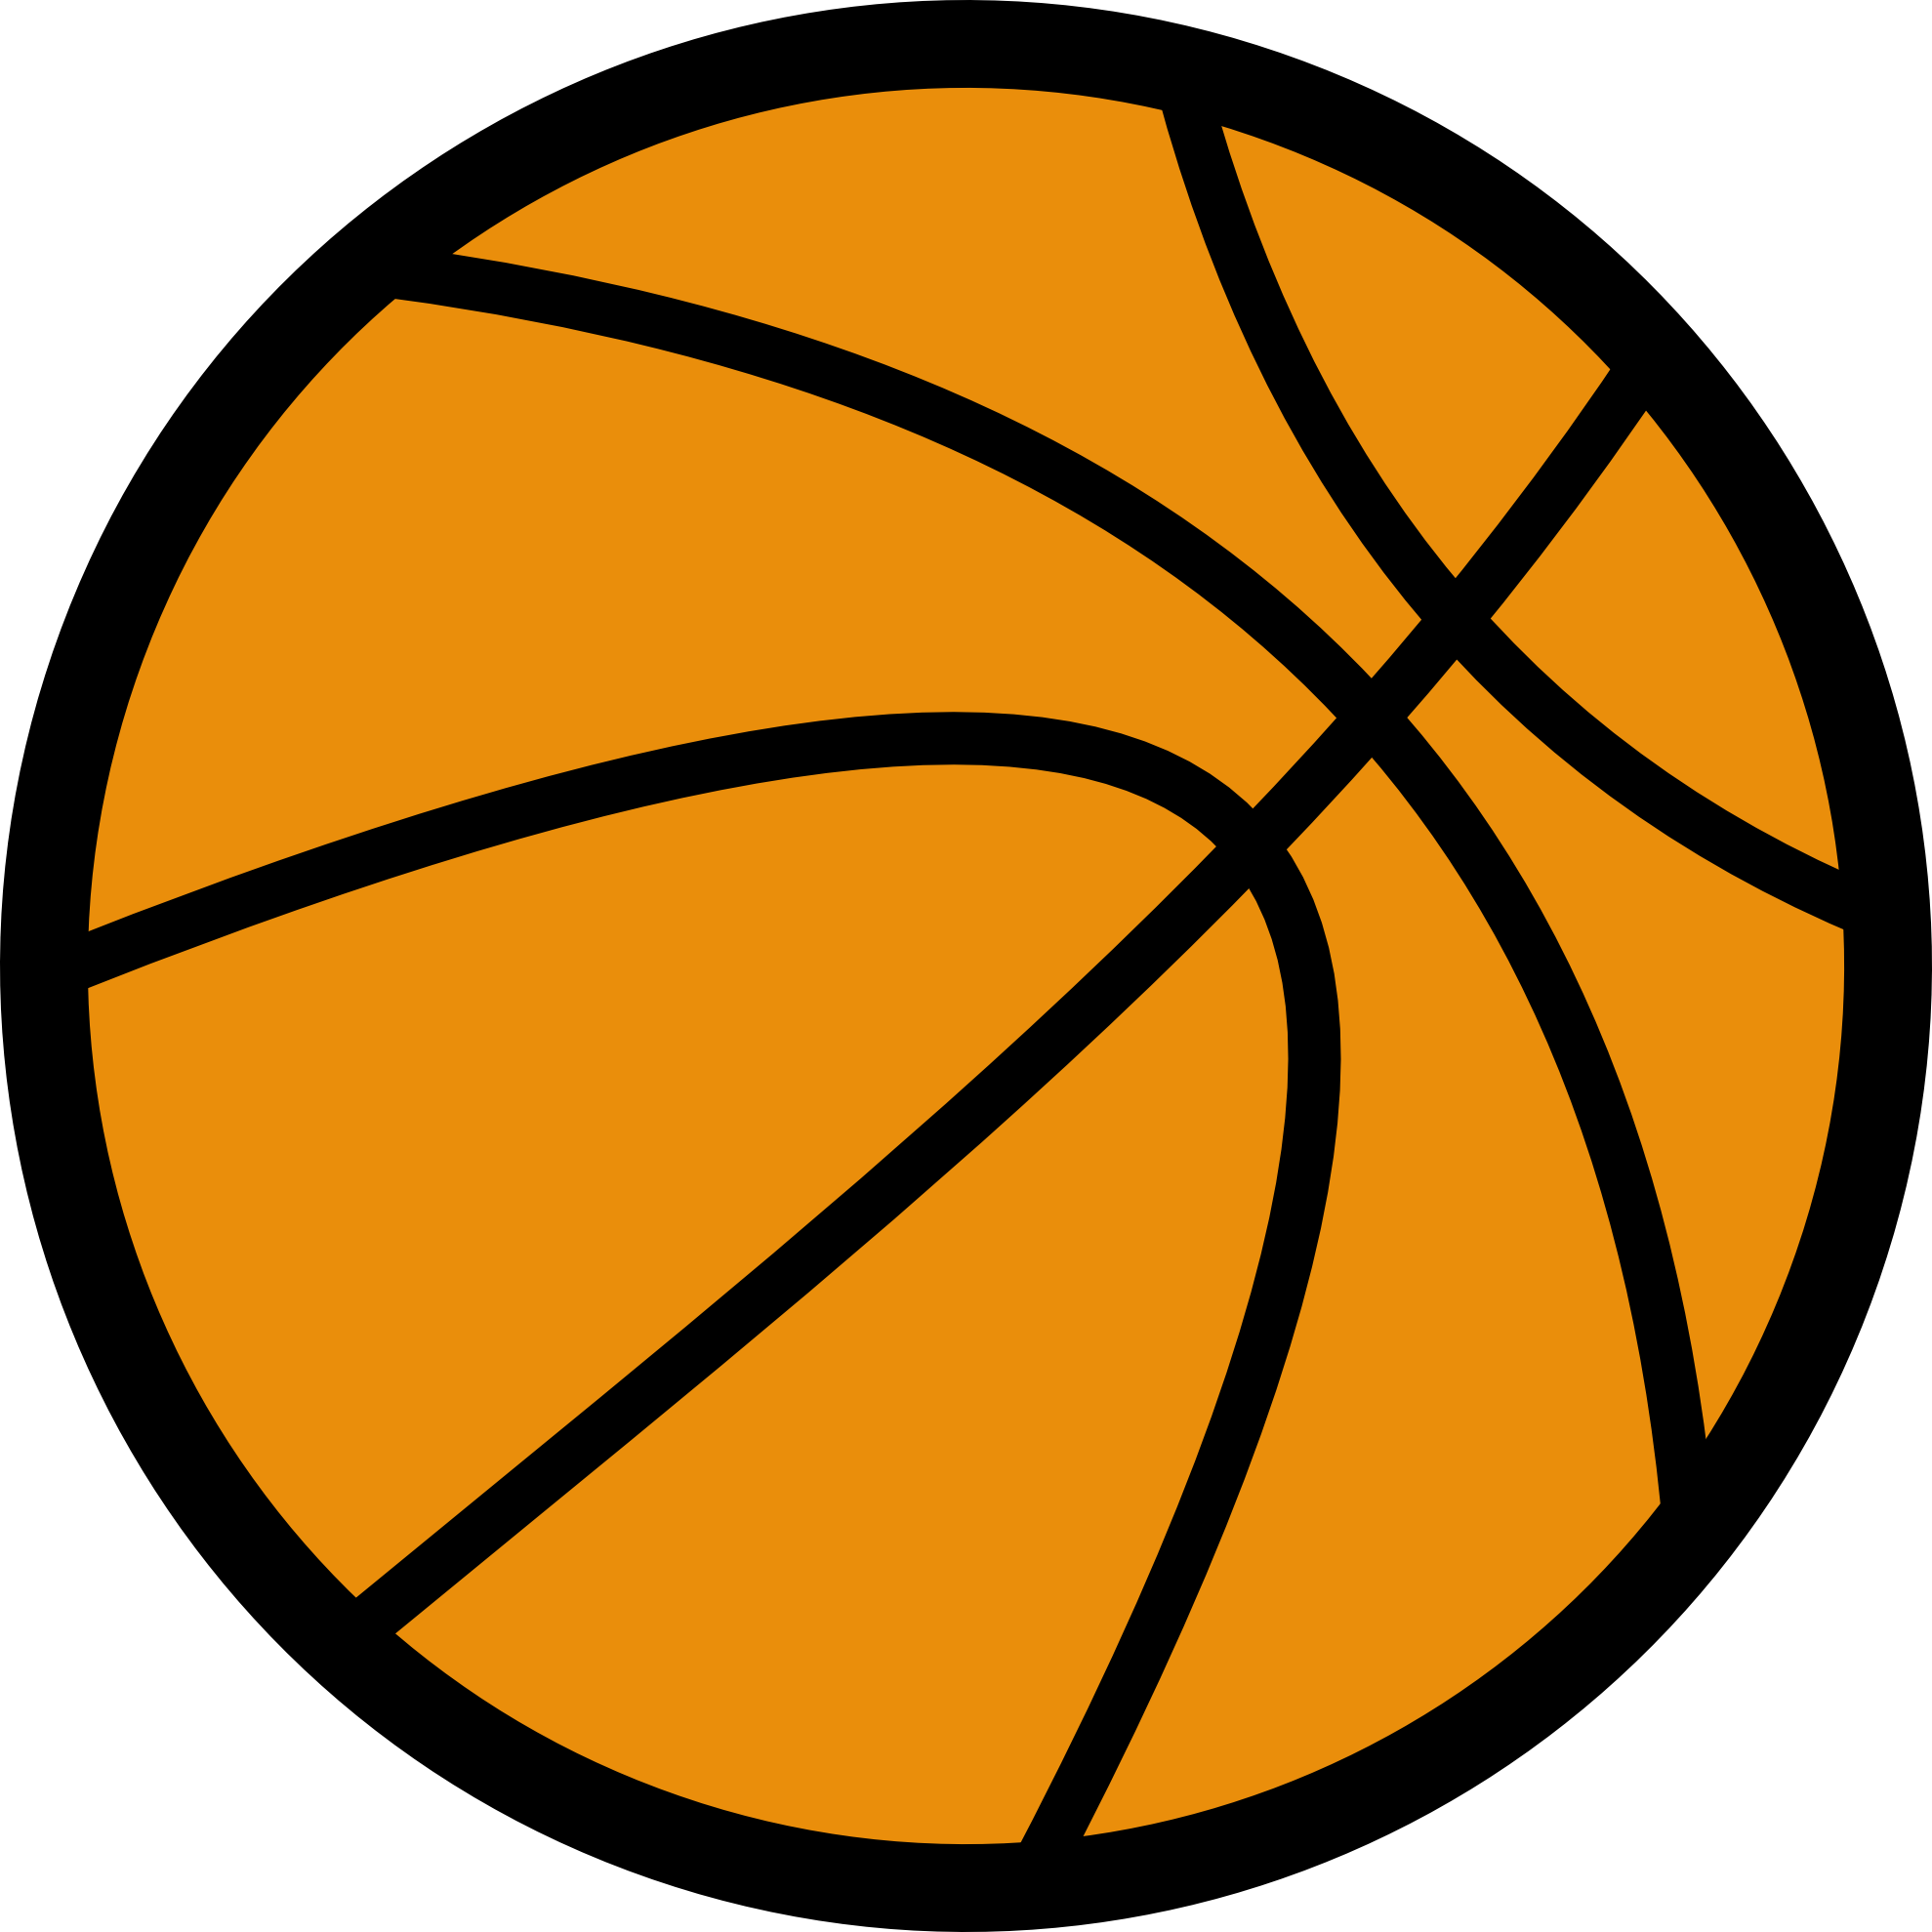 Download Basketball Clip Art HQ PNG Image | FreePNGImg